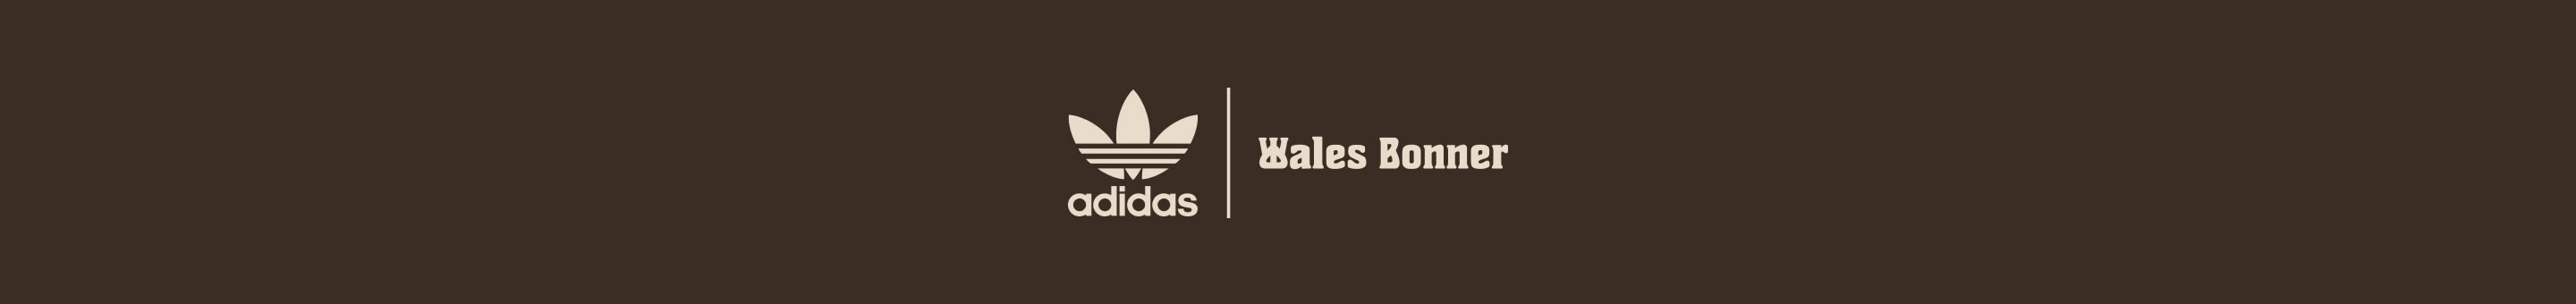 adidas Originals by Wales Bonner | adidas CA